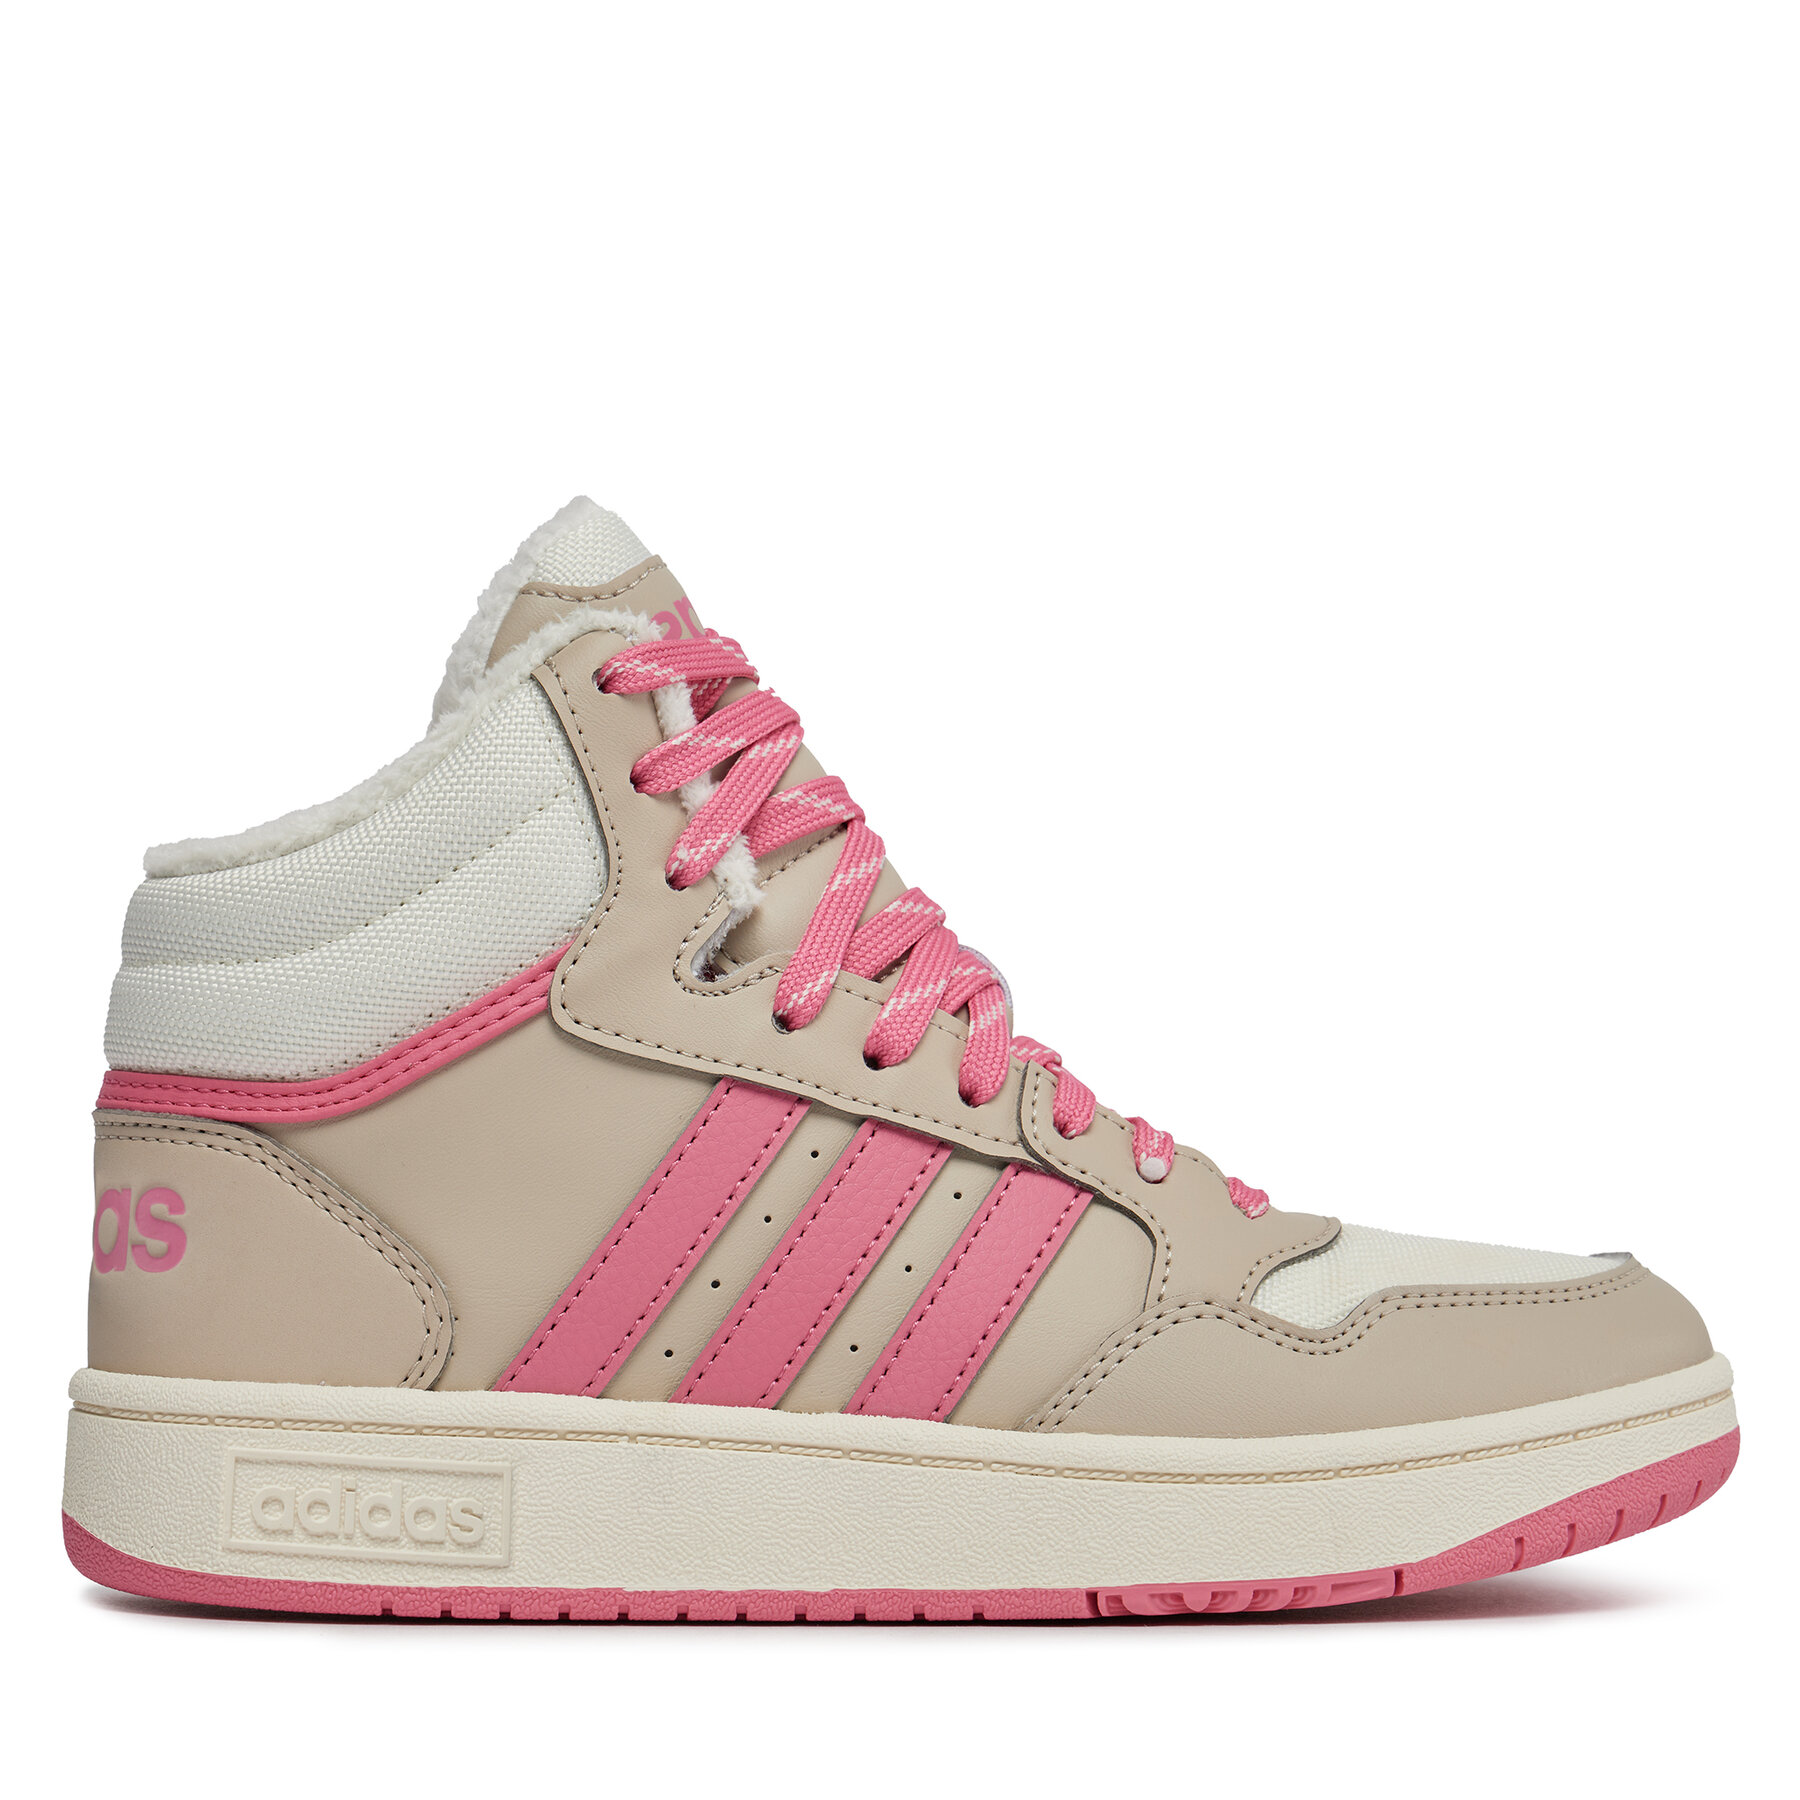 Comprar en oferta Adidas Hoops Mid 3.0 Kids wonder beige/pink fusion/off white